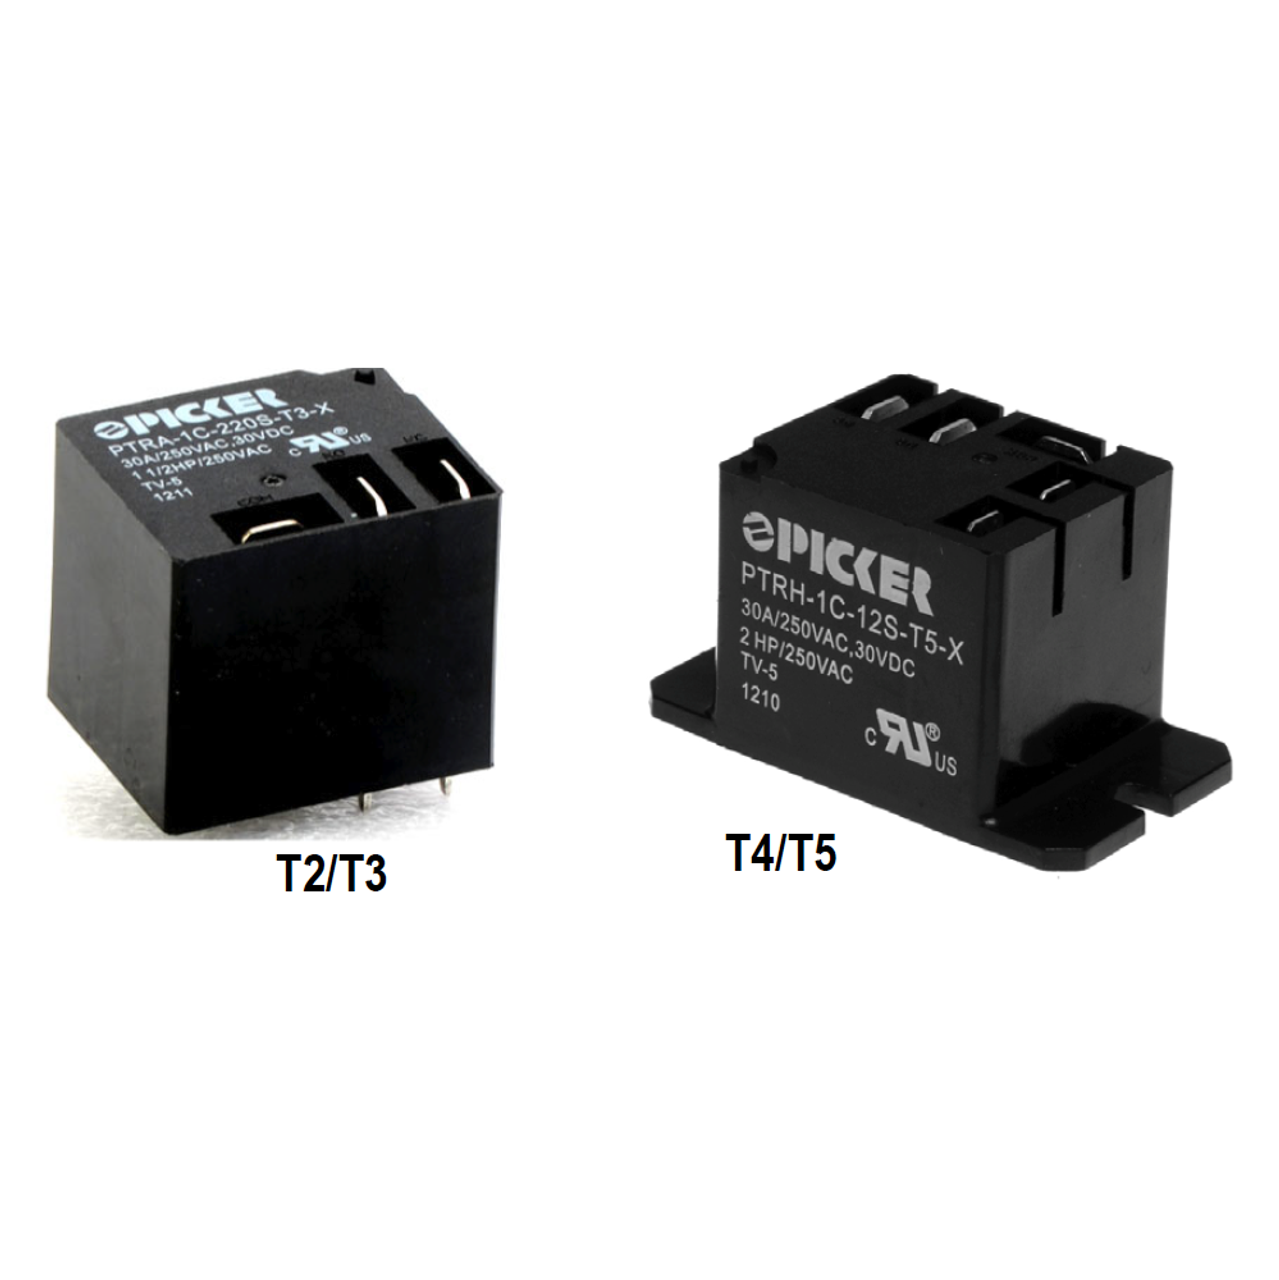 Picker PTRH-1C-110SF-T2-X67A0.6 Power Relays